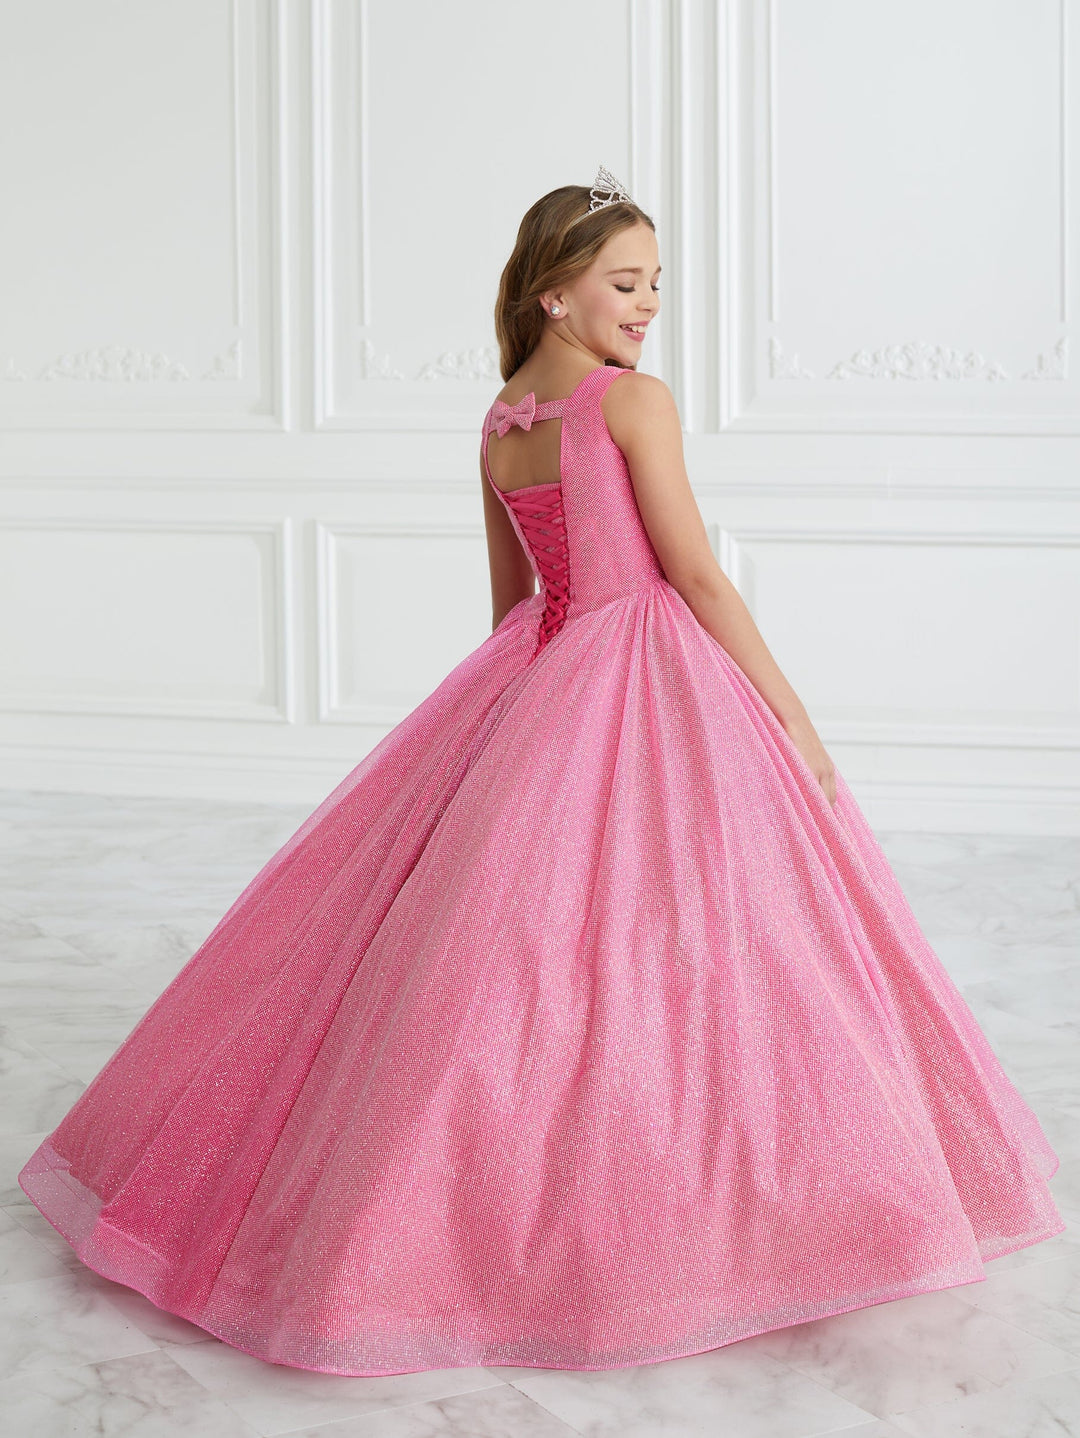 Girls Glitter Sleeveless Gown by Tiffany Princess 13684